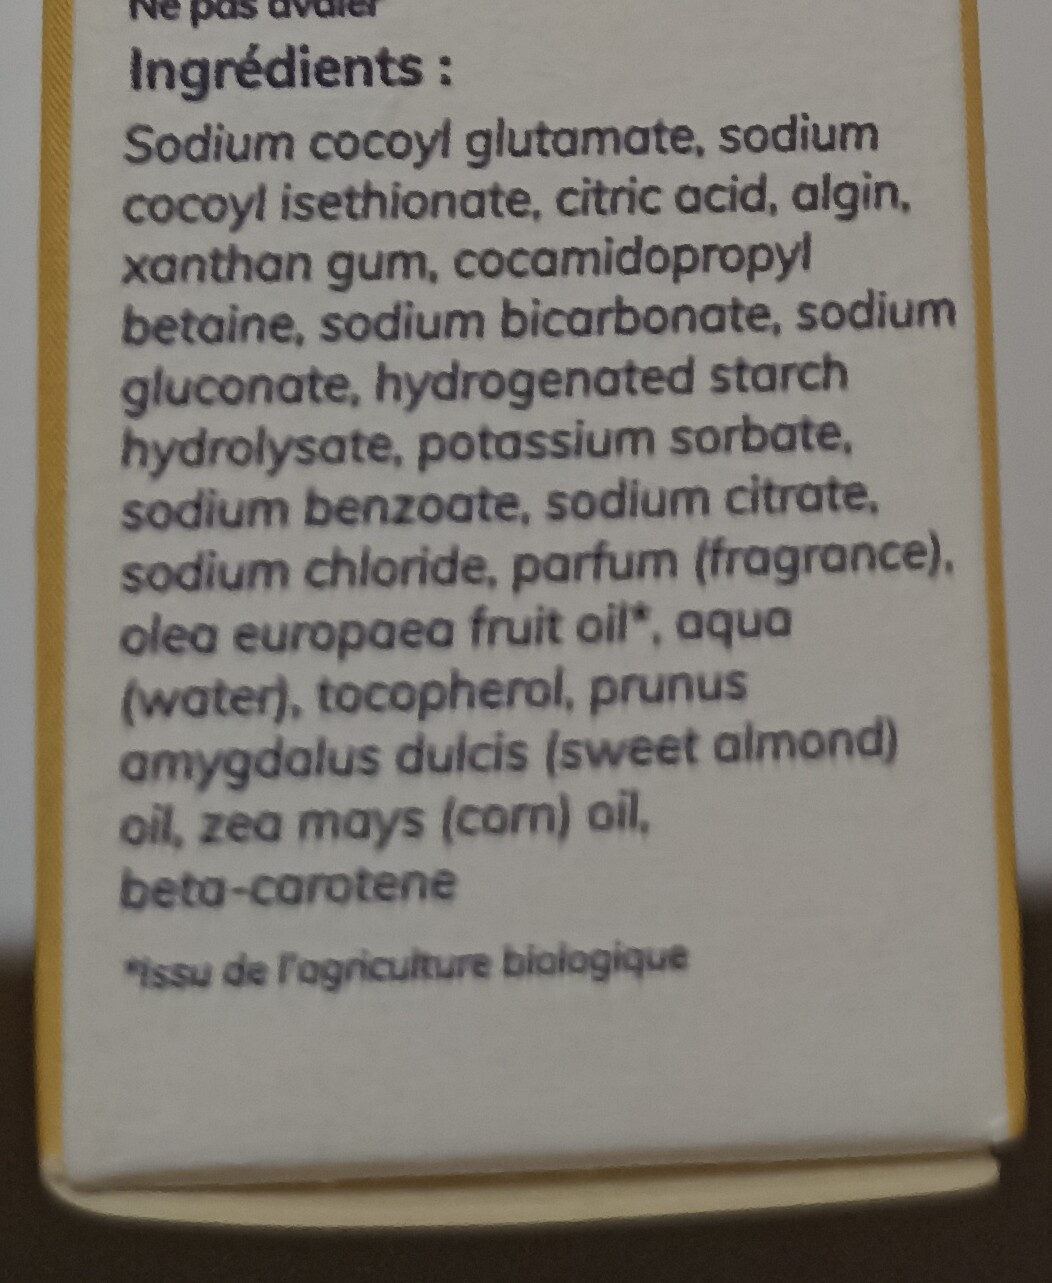 gel douche a dissoudre - Ingredients - fr